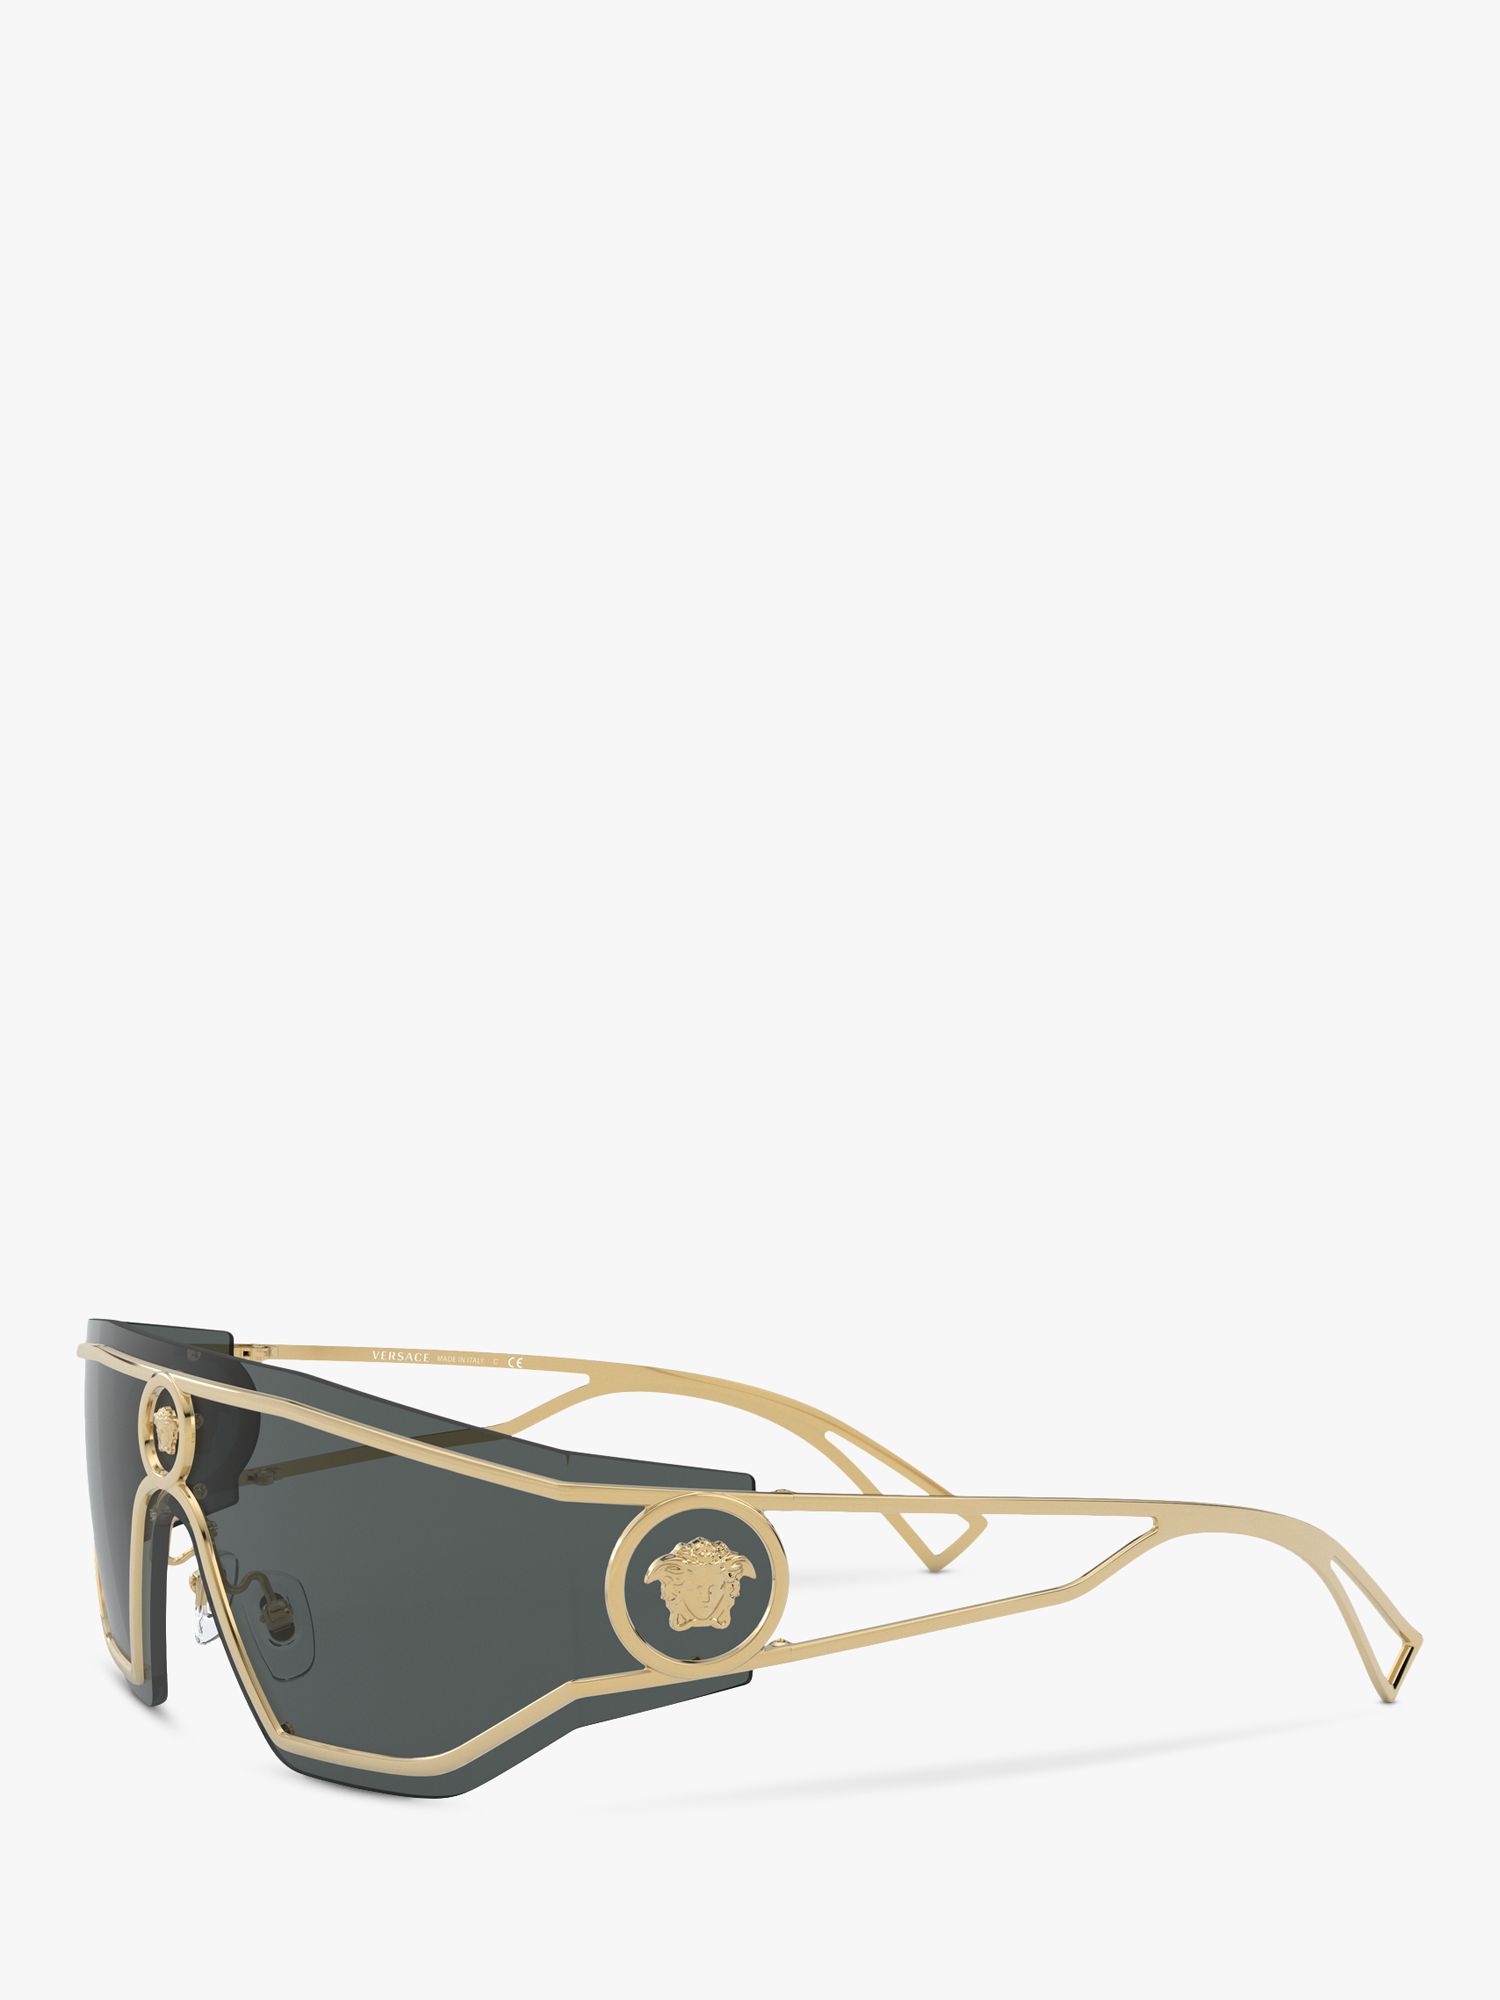 Versace VE2226 Men's Irregular Sunglasses, Gold/Black at John Lewis ...